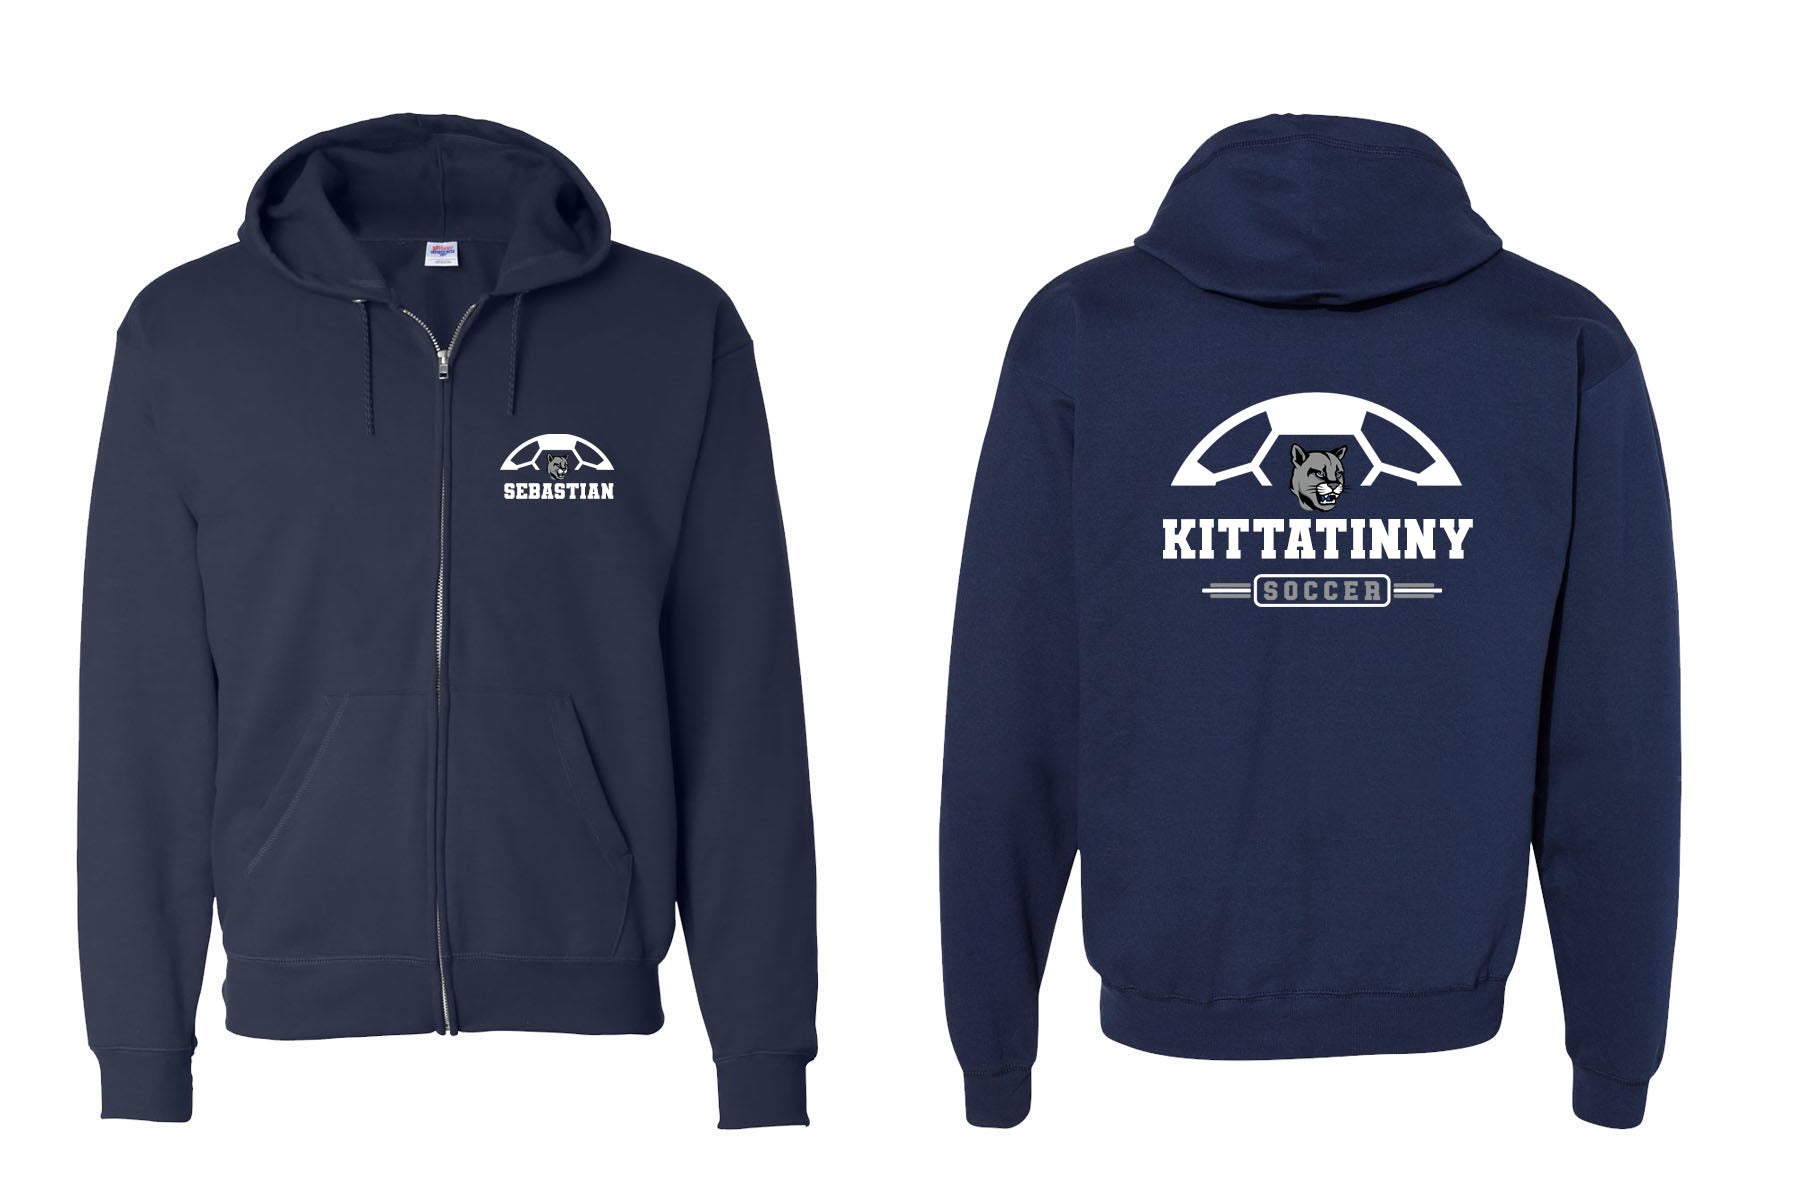 Kittatinny Soccer design 2 Zip up Sweatshirt